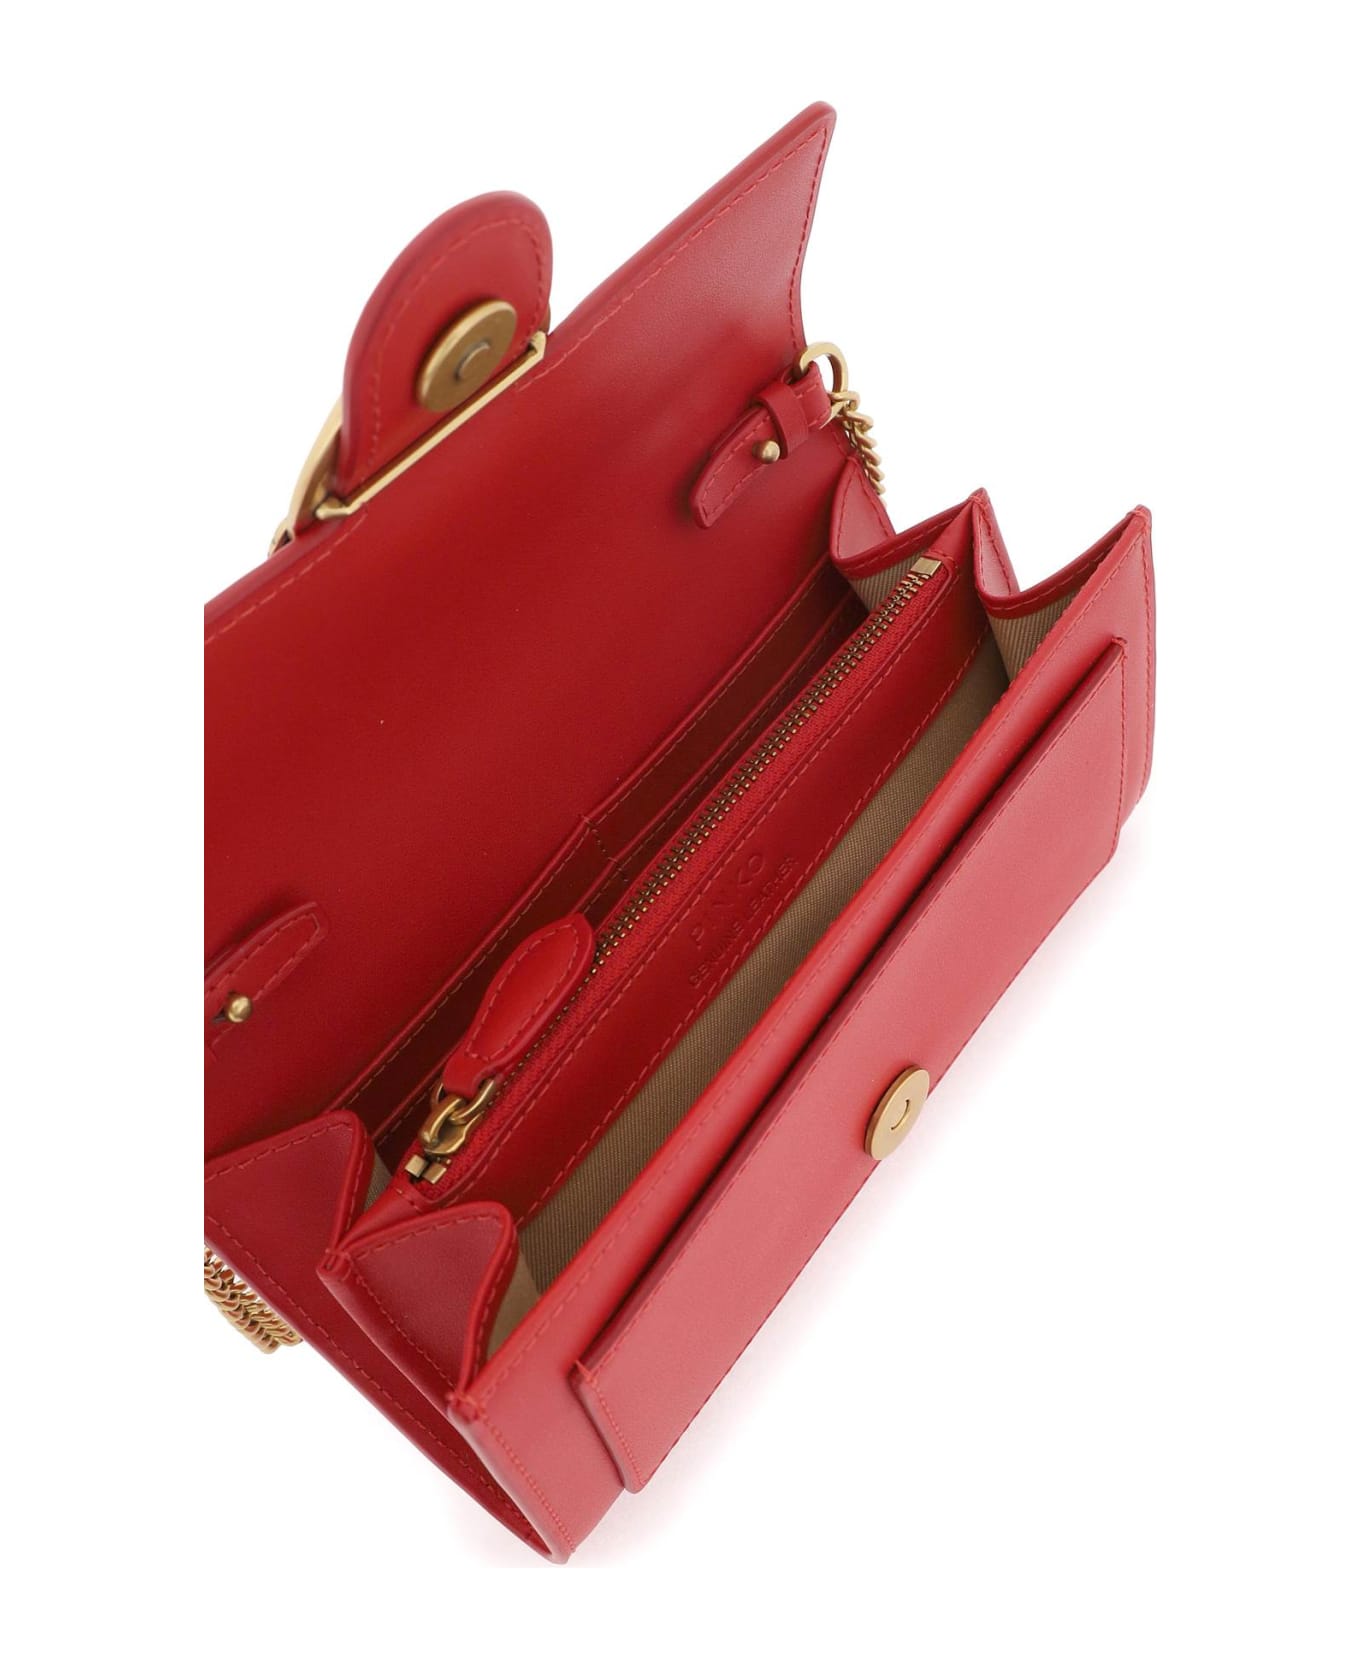 Pinko Love Bag Crossbody Bag - ROSSO ANTIQUE GOLD (Red)